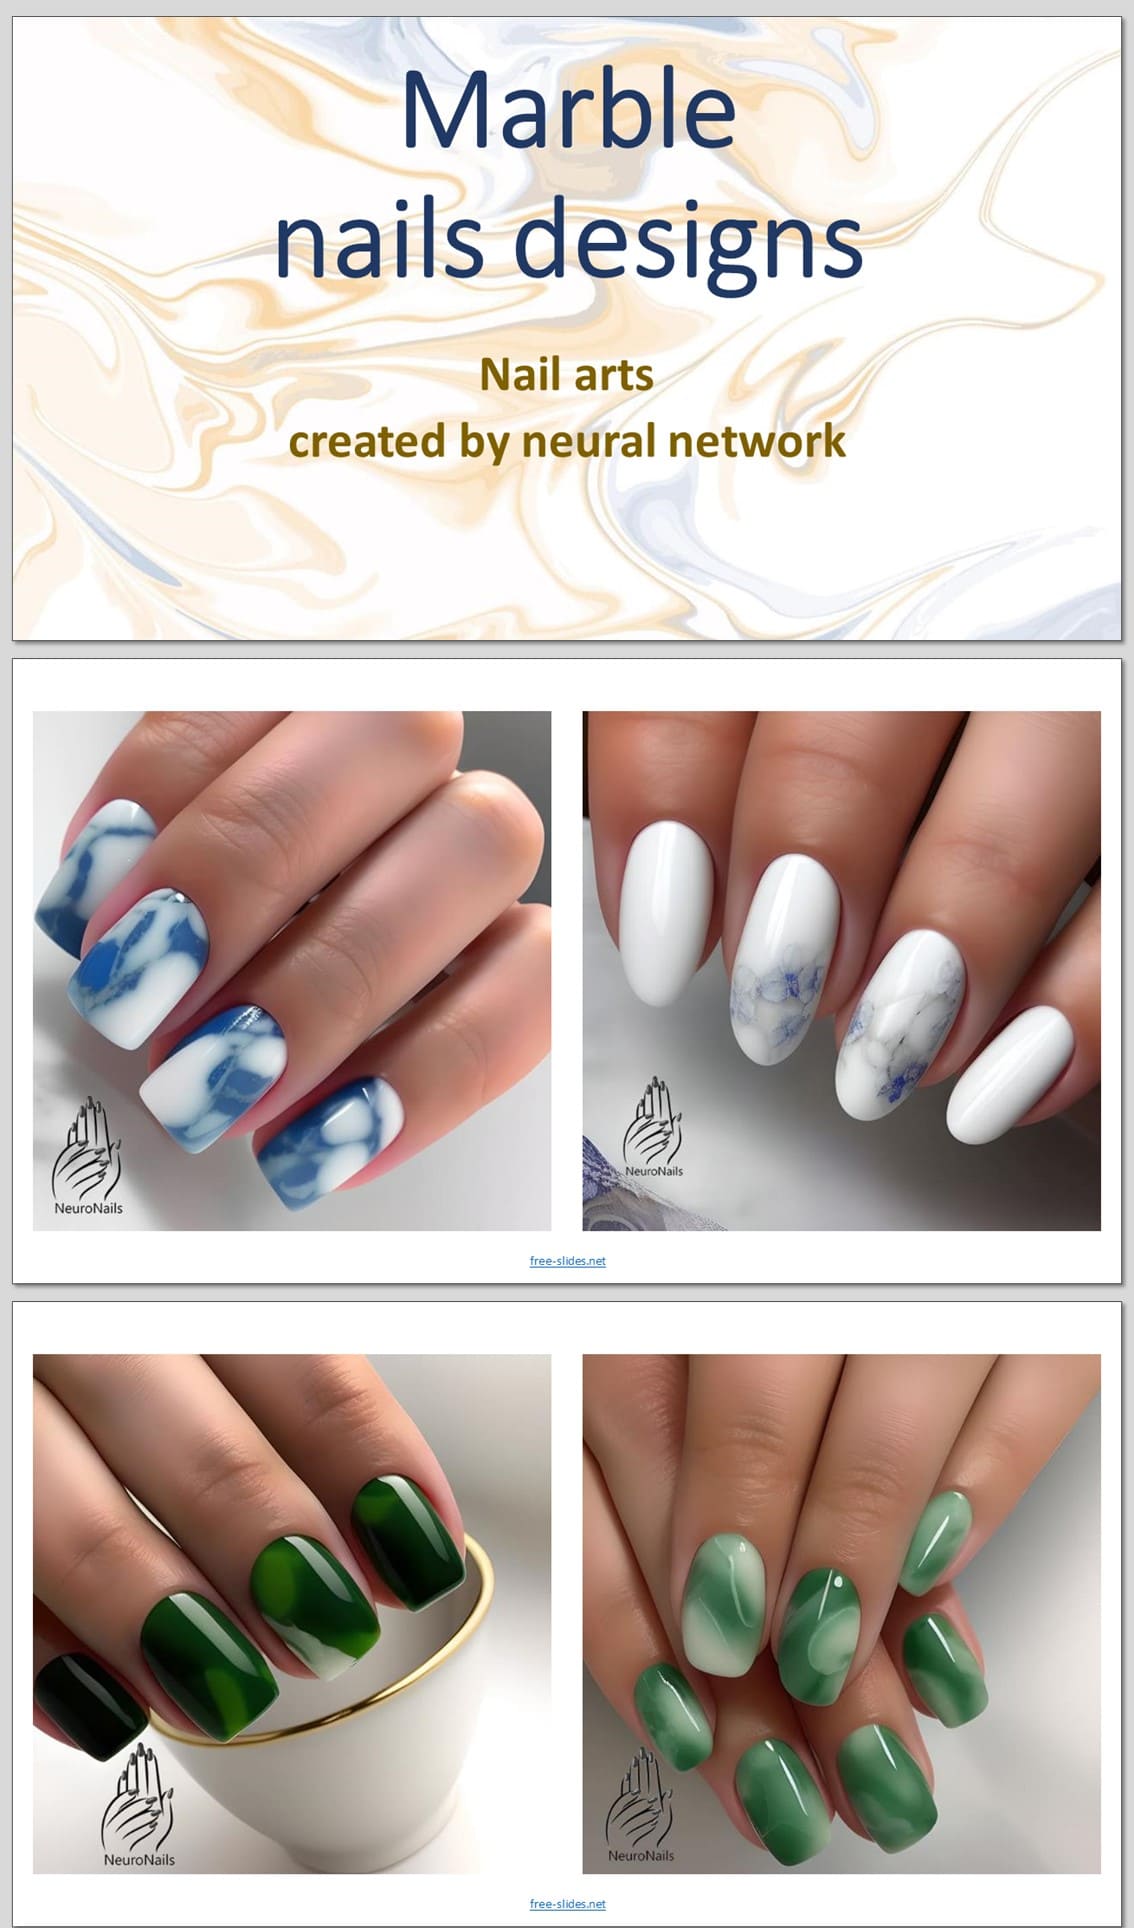 Neural network creates marble nails designs